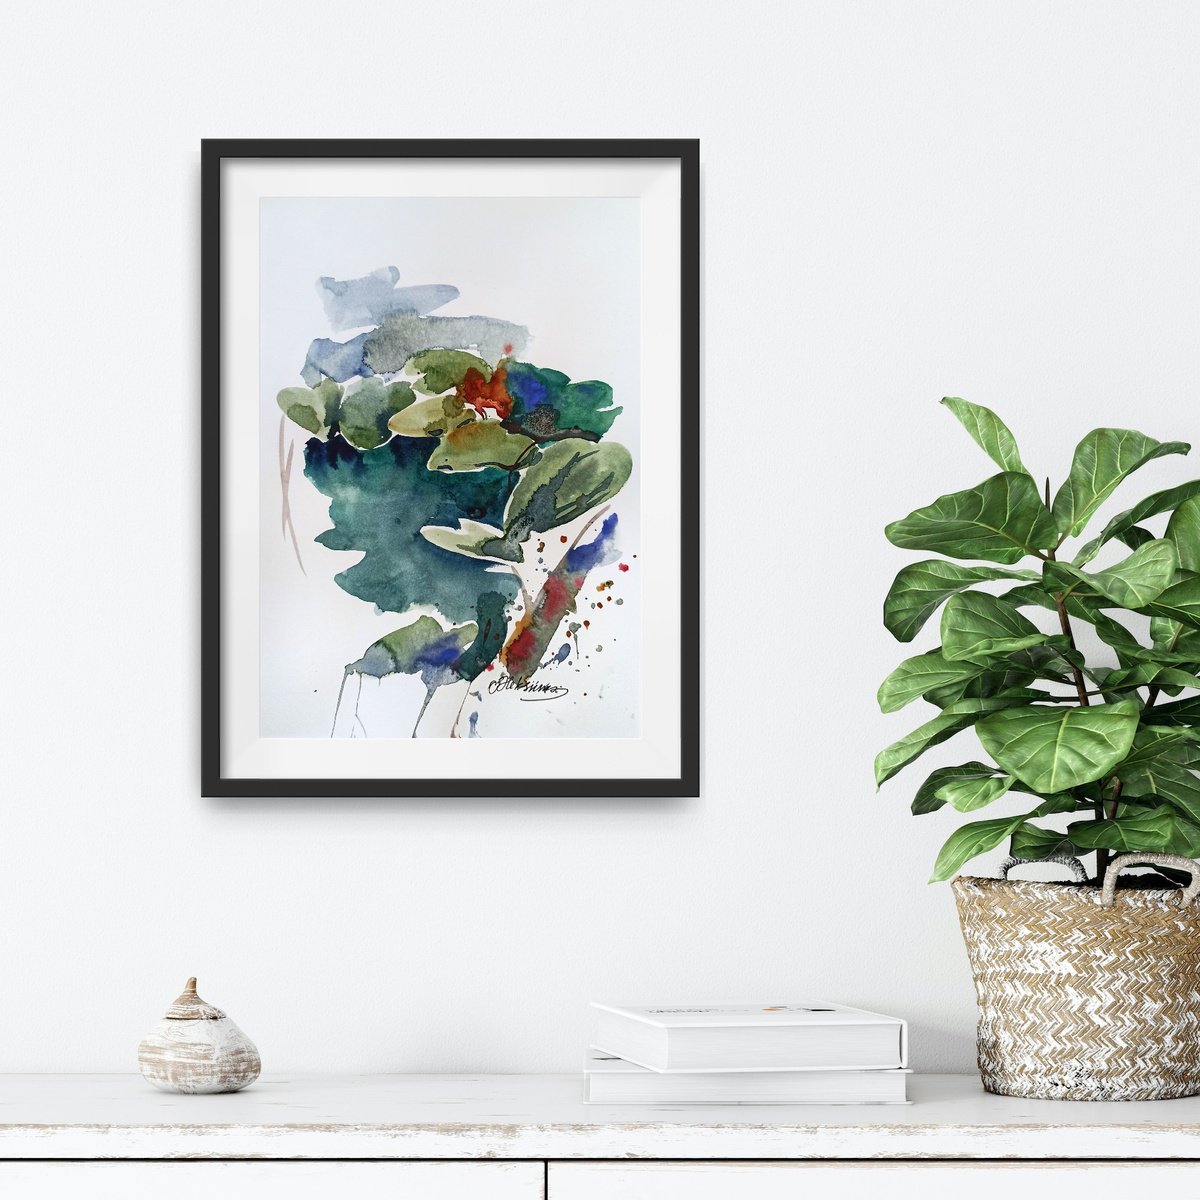 Water lilies - original watercolor sketch medium size by Olena Koliesnik